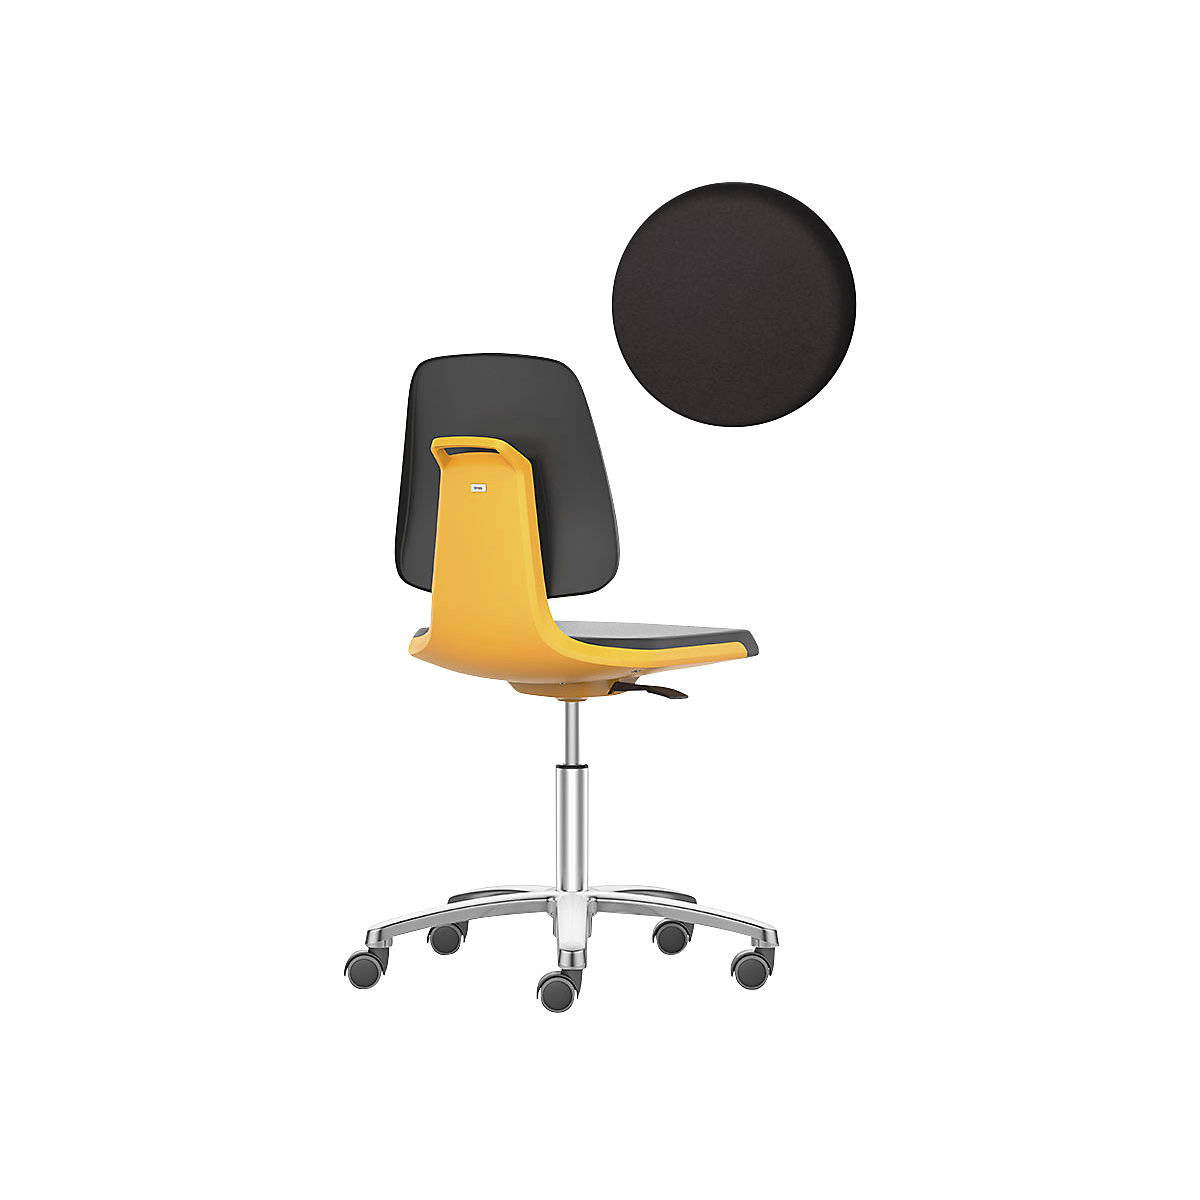 LABSIT industrial swivel chair – bimos, five-star base with castors, vinyl upholstered seat, orange-20